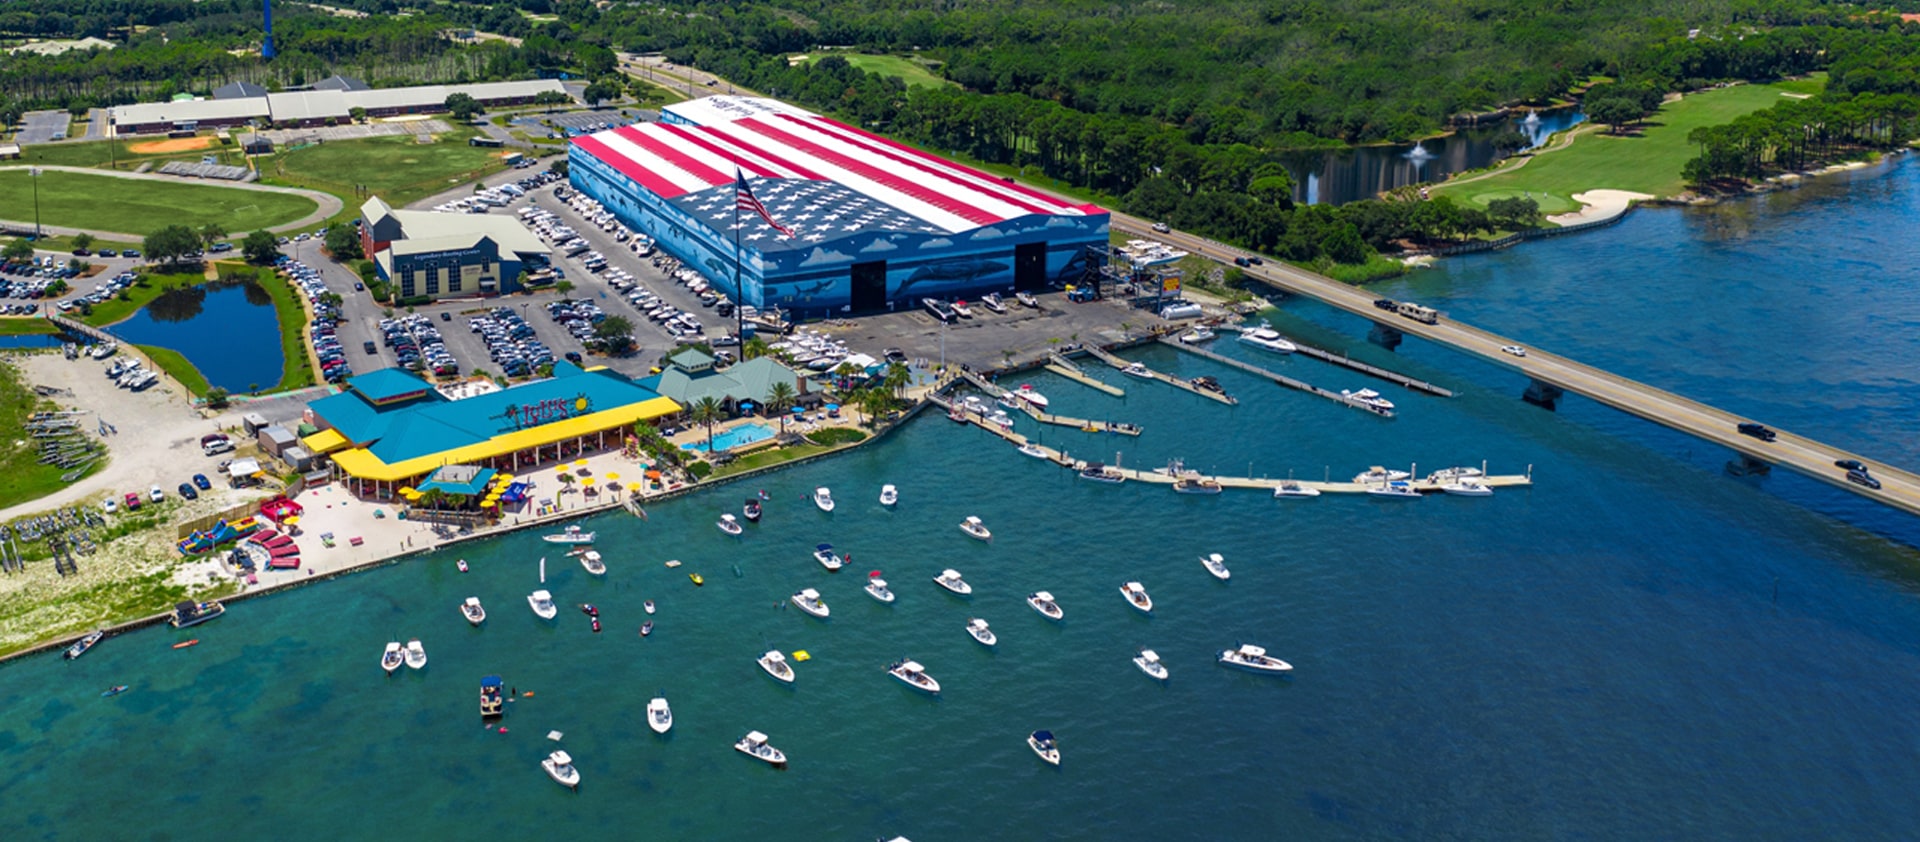 legendary marina & yacht club in gulf shores